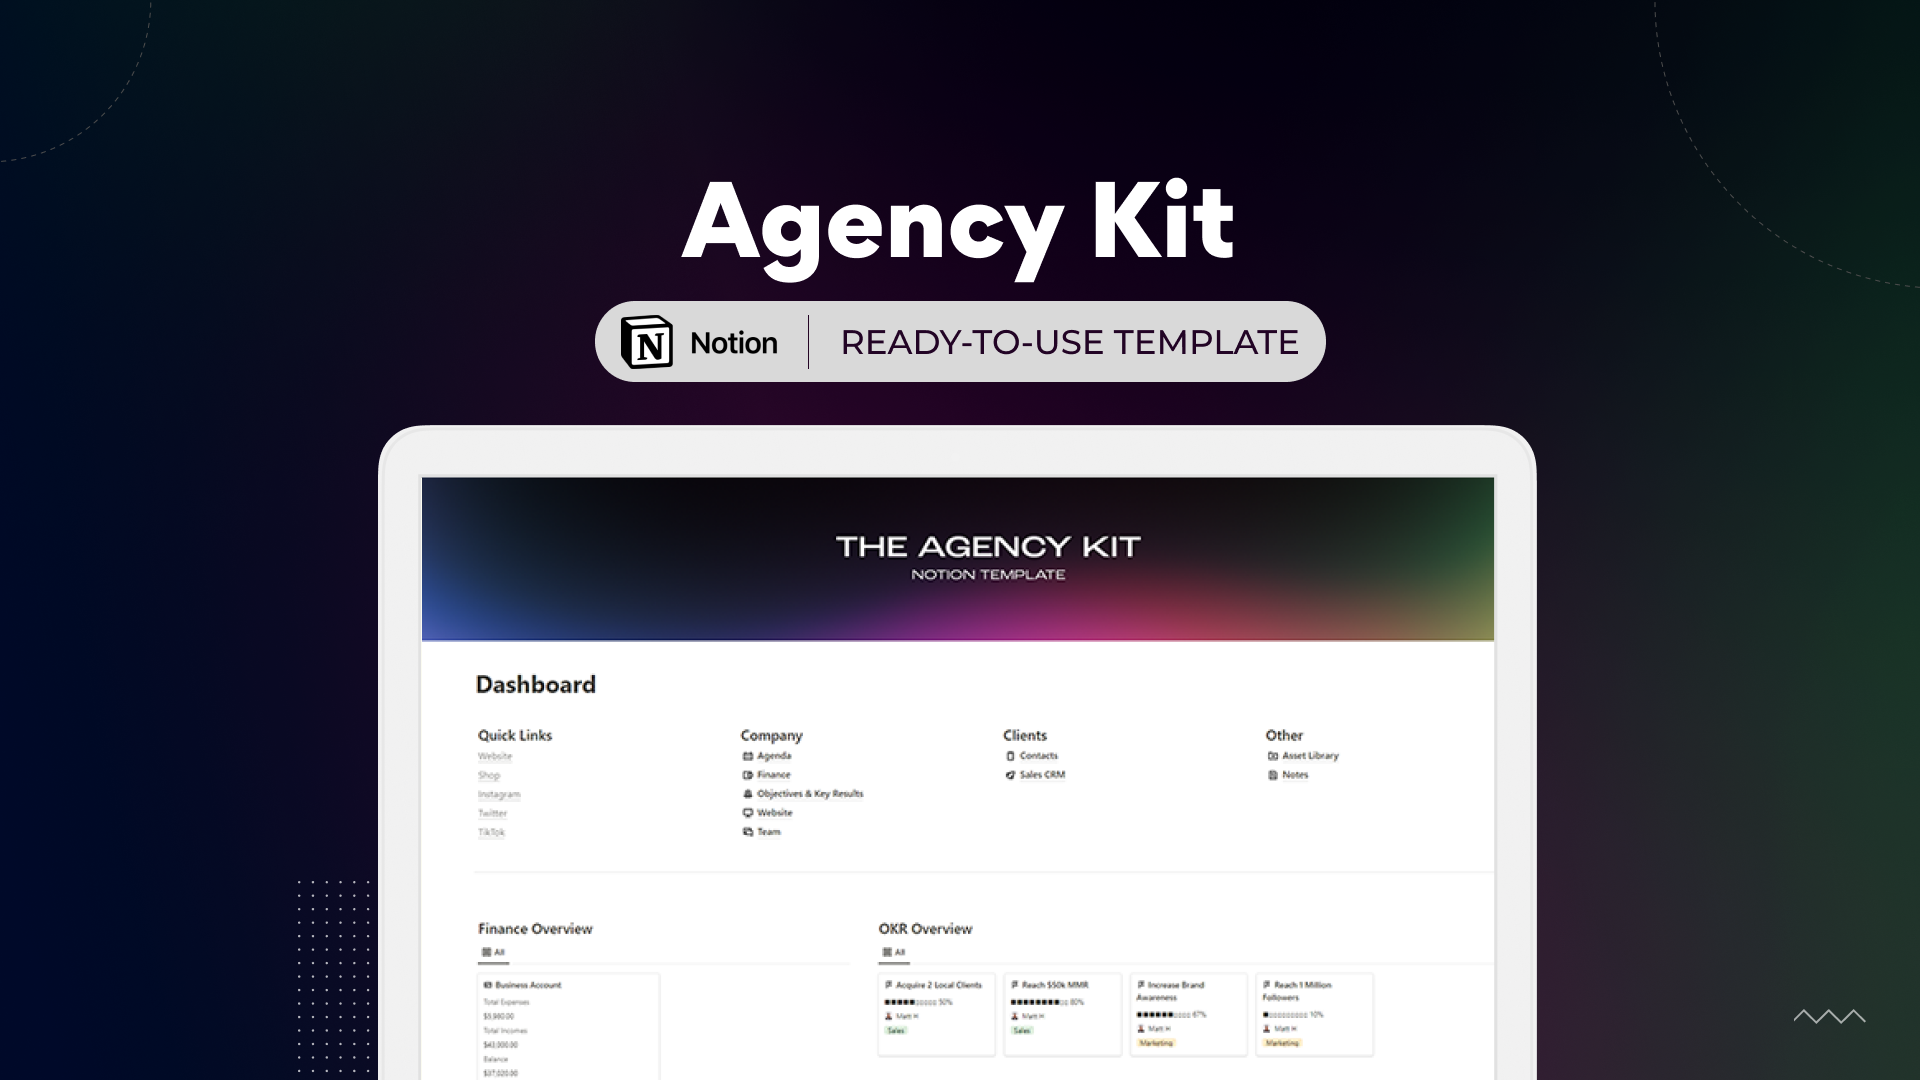 Notion Agency Kit